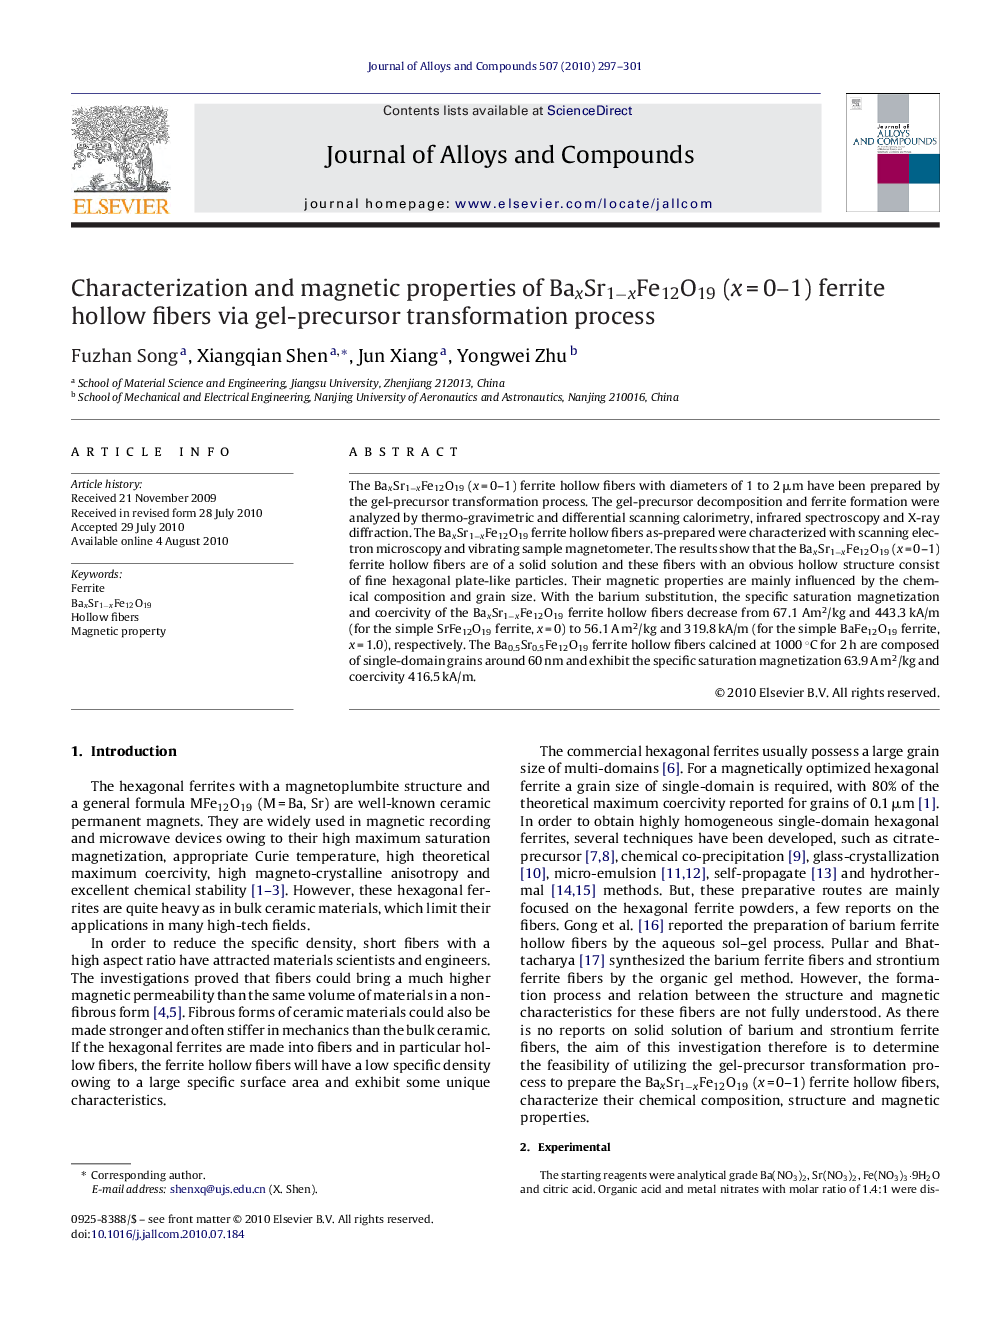 Characterization and magnetic properties of BaxSr1−xFe12O19 (x = 0–1) ferrite hollow fibers via gel-precursor transformation process